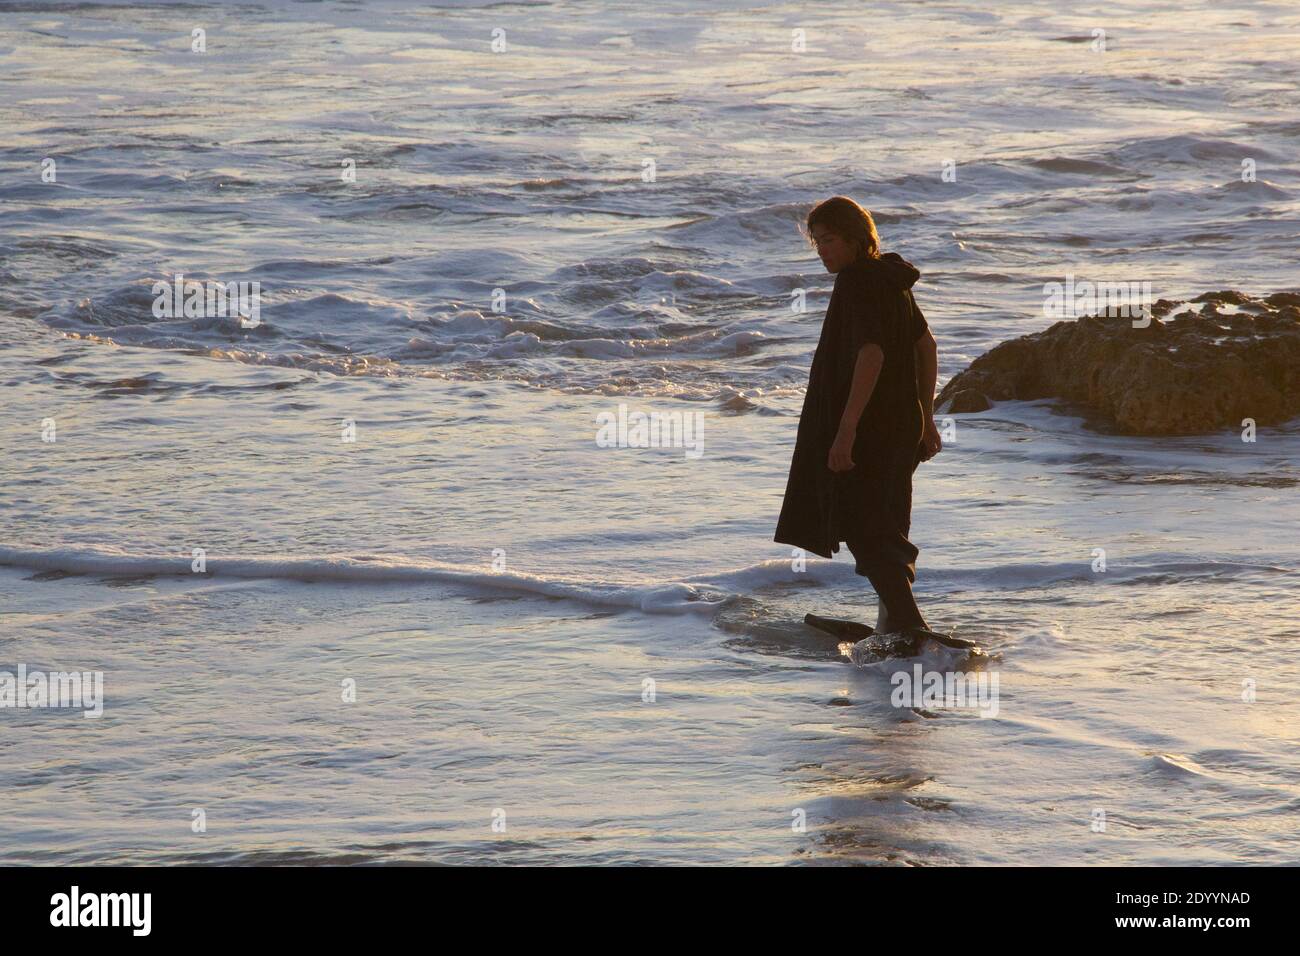 Post Covid lockdown, man wets his feet in sea water, Mallorca Spain Stock Photo